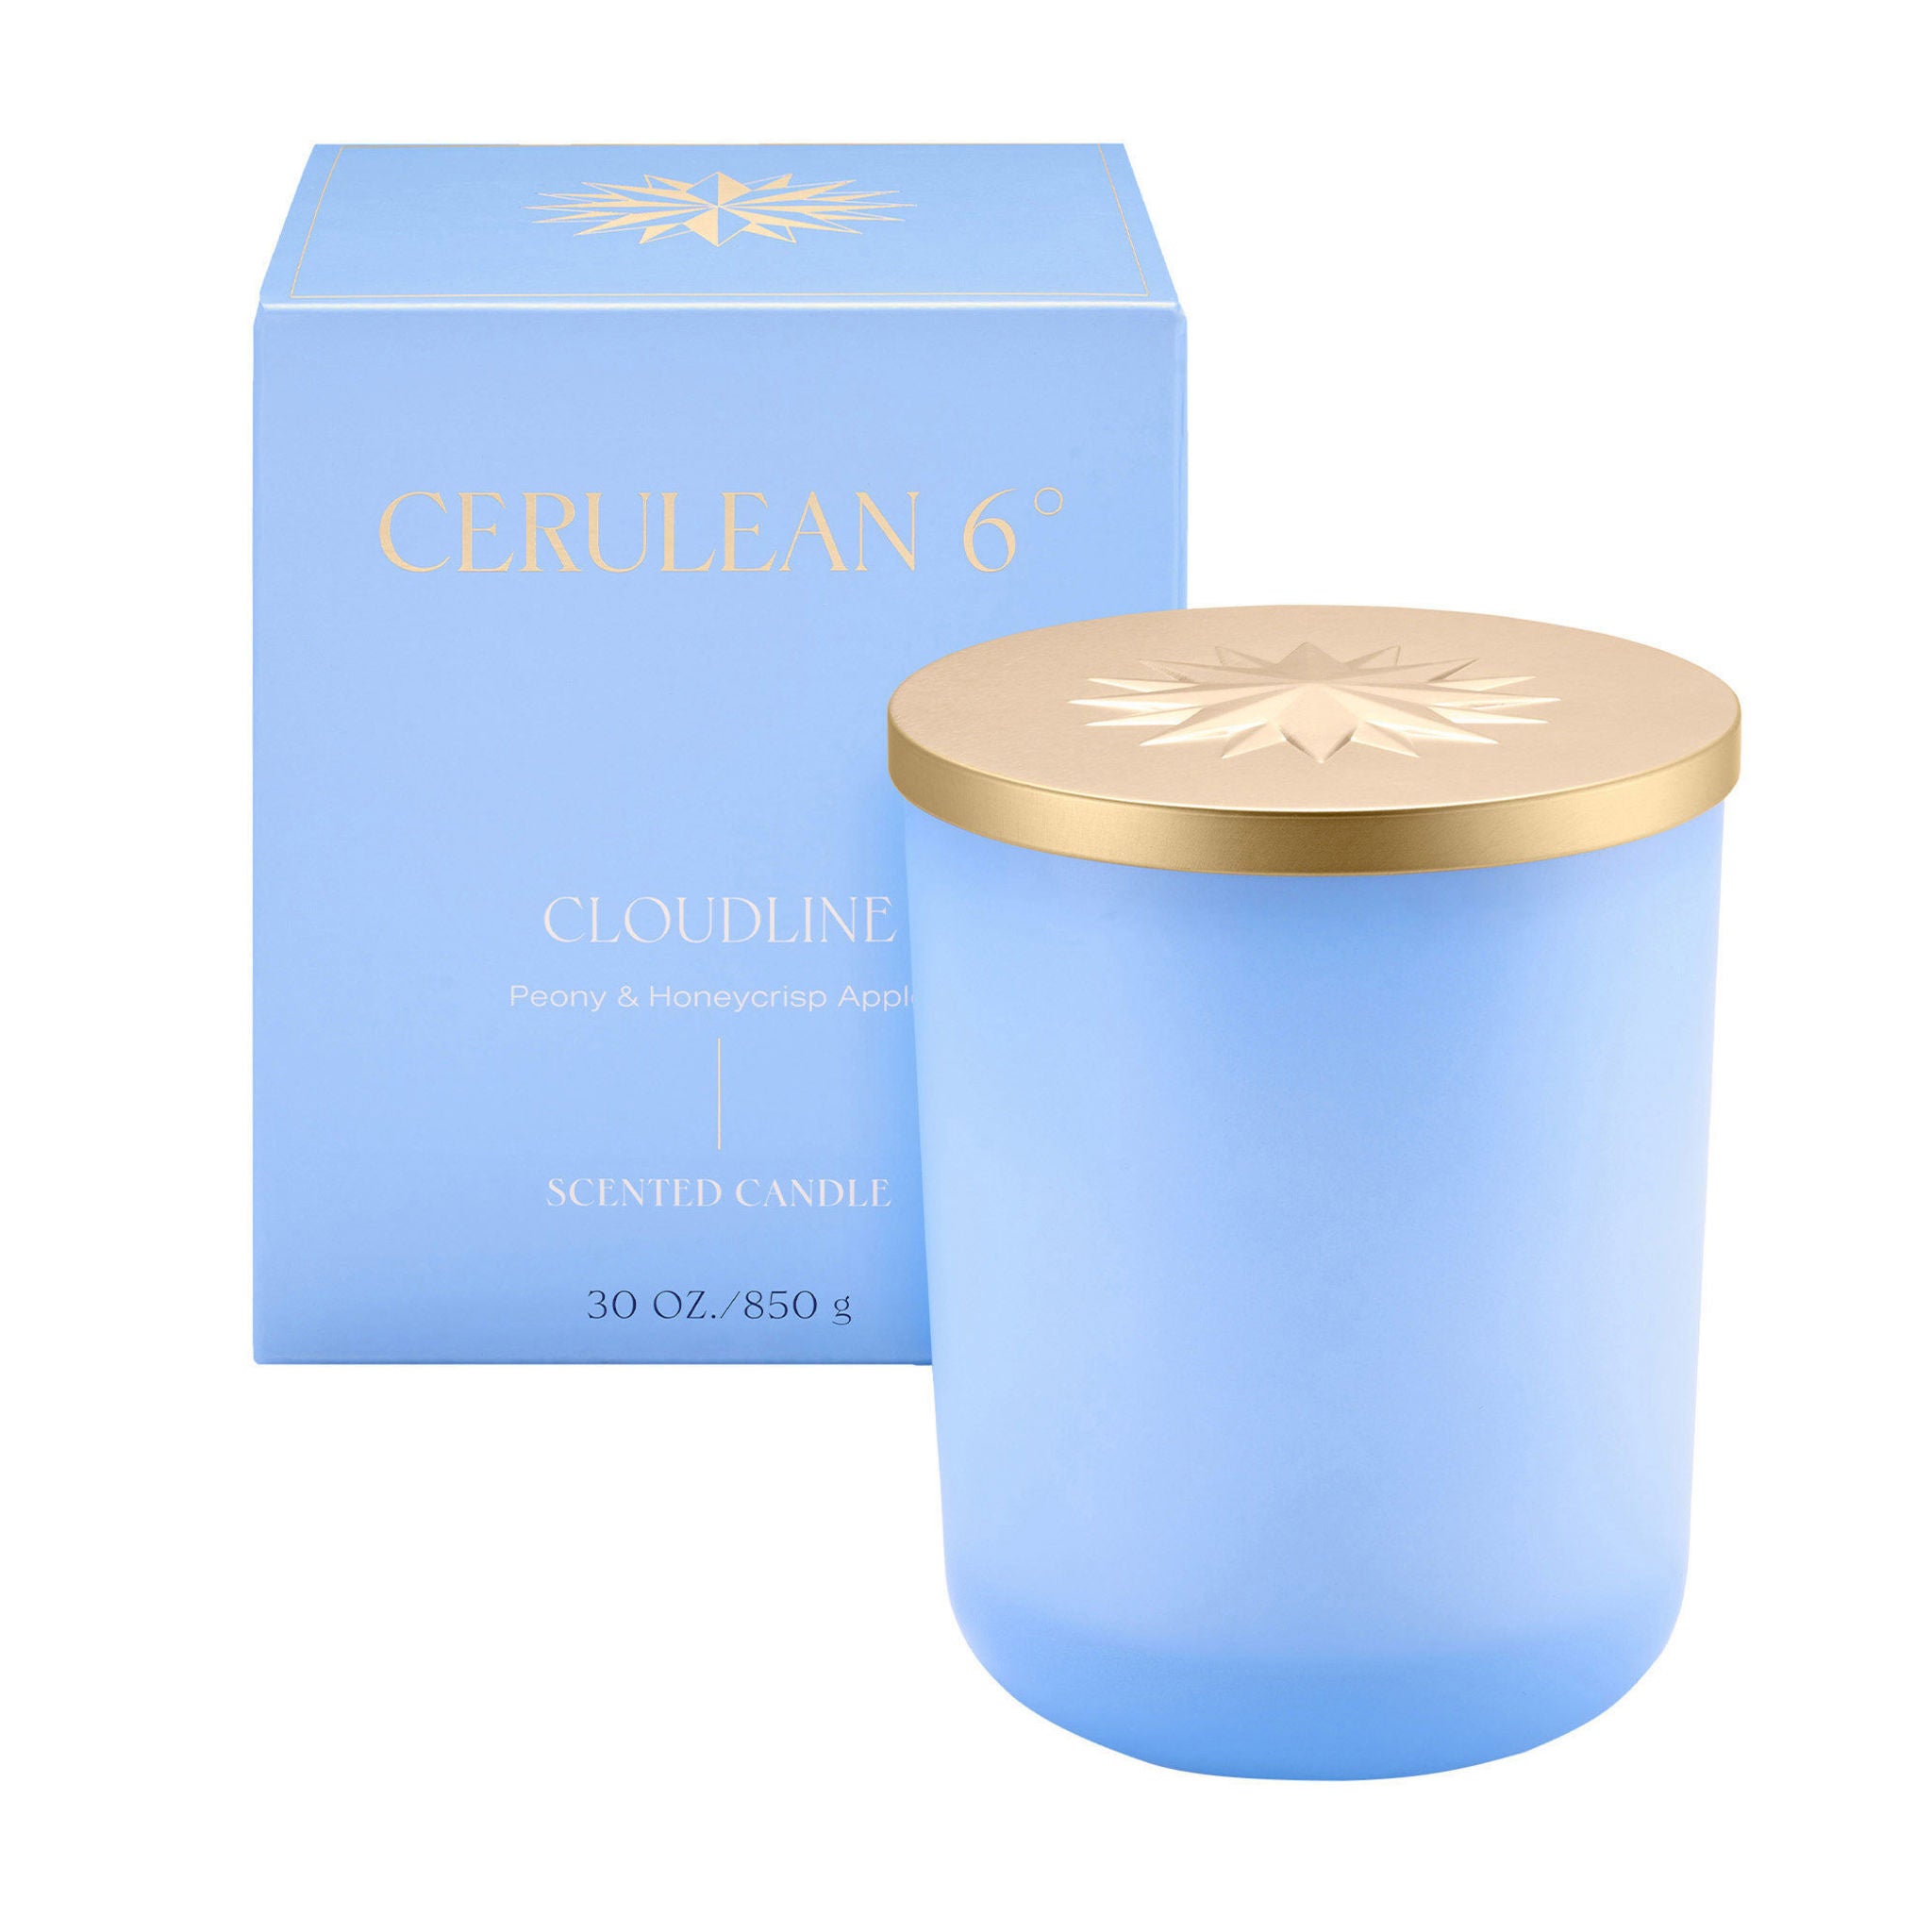 Cerulean 6 Cloudline Luxury Candle Size variant: 30 oz main image.